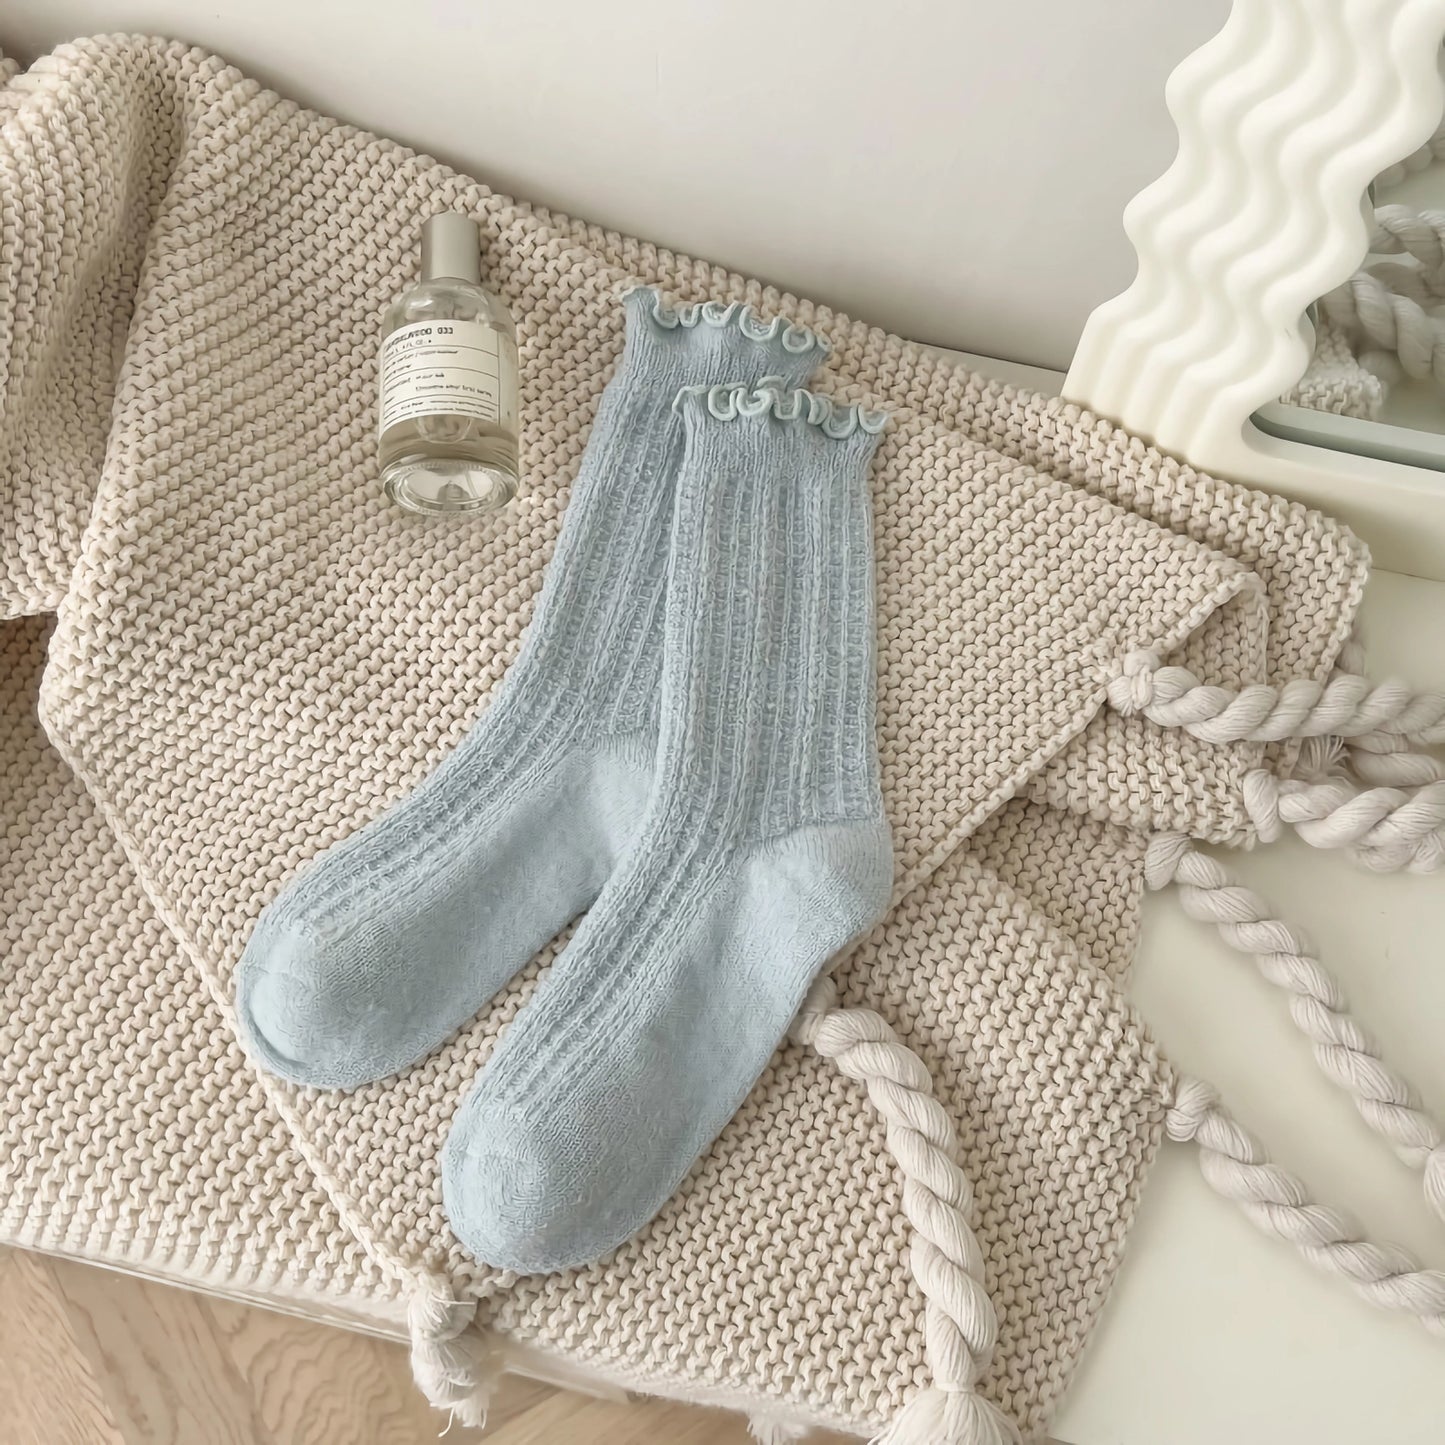 Rachel Ruffle Socks - Knitted Wool Crew Socks